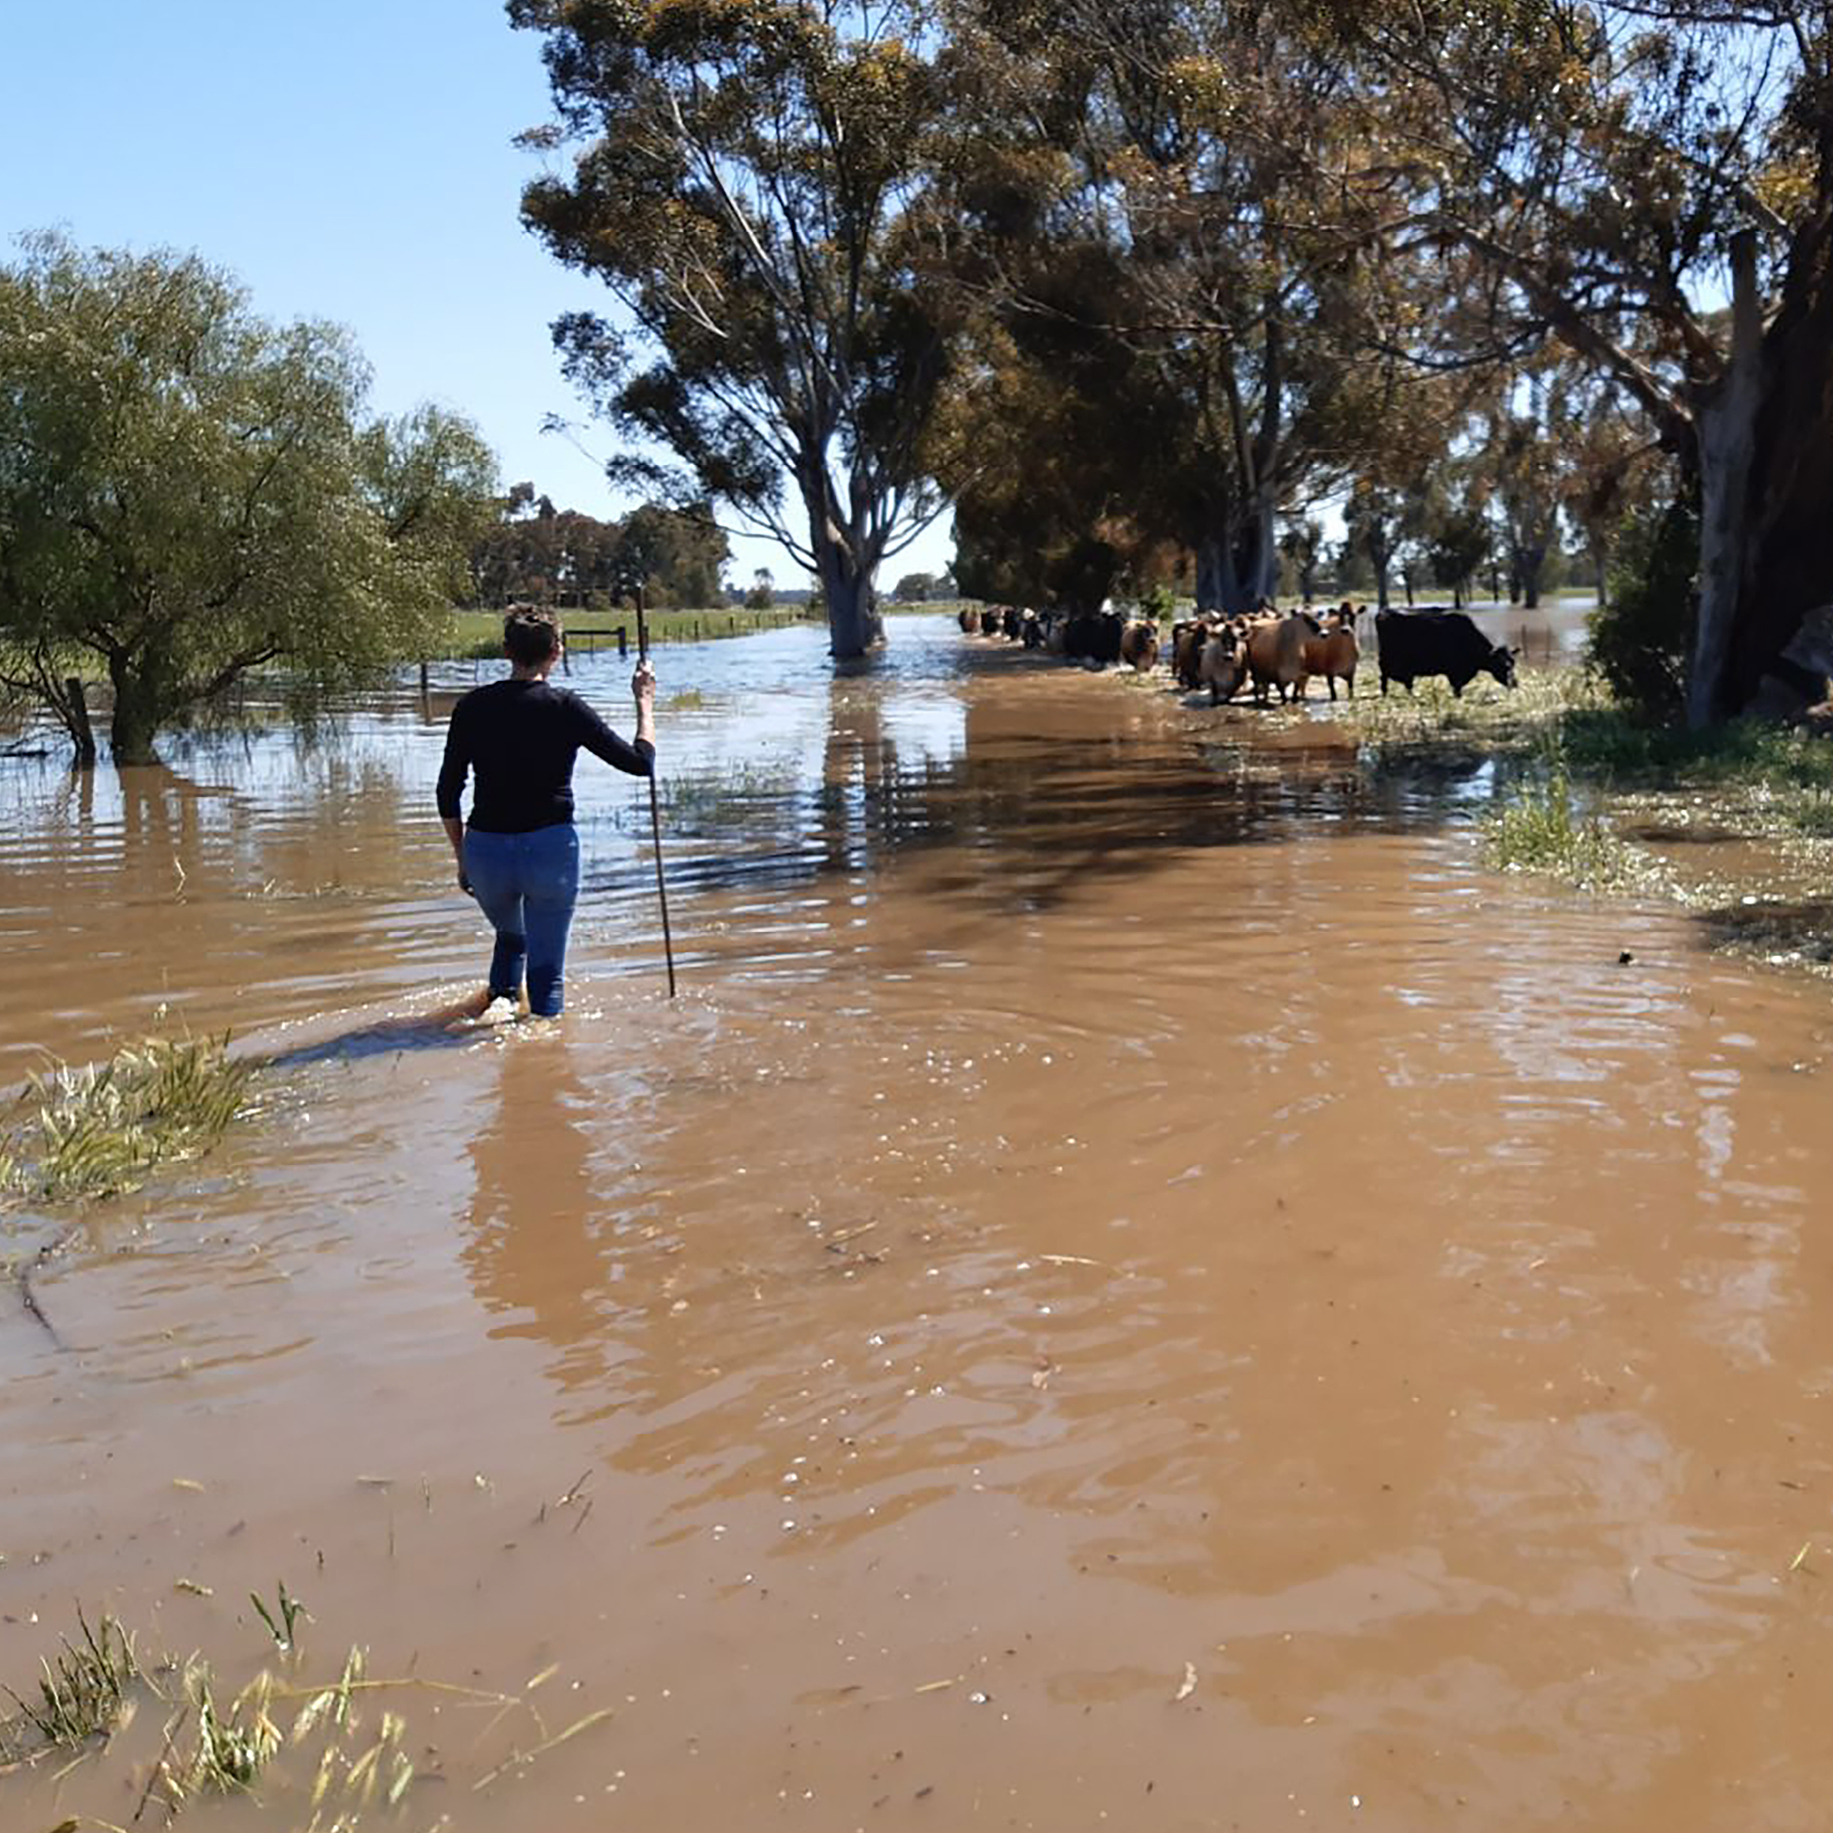 A farmer is herding cattle through shallow flood water.